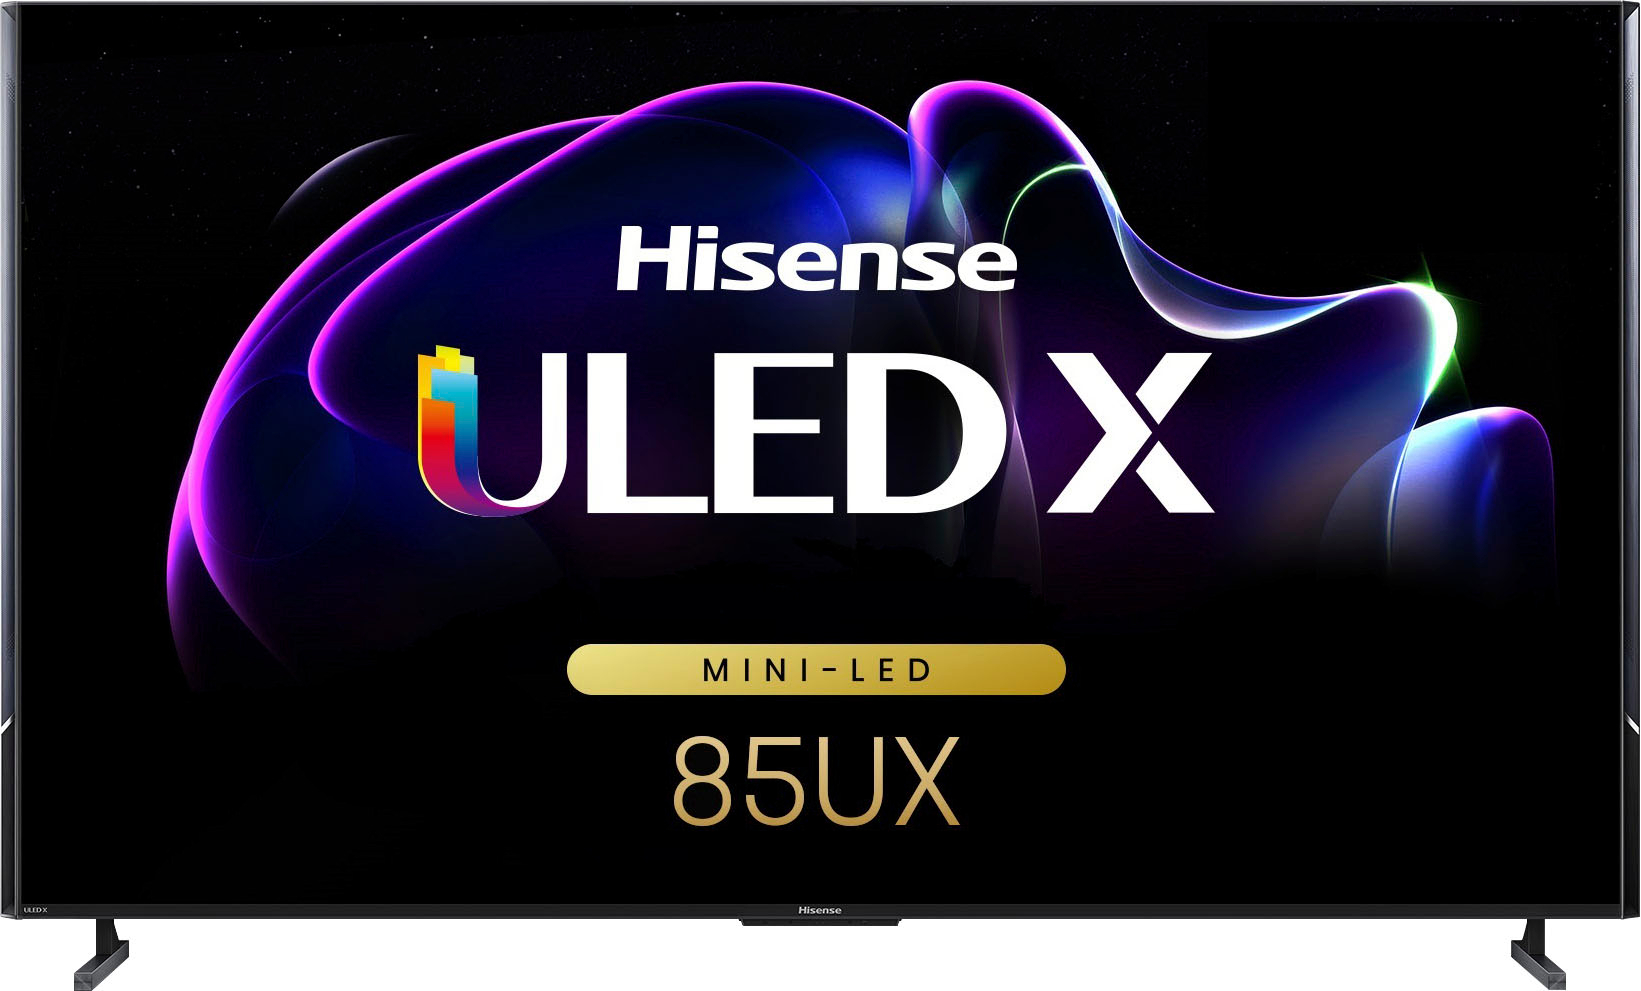 Hisense 85" Class UX Series Mini-LED ULED 4K UHD Google TV 85UX - Best Buy